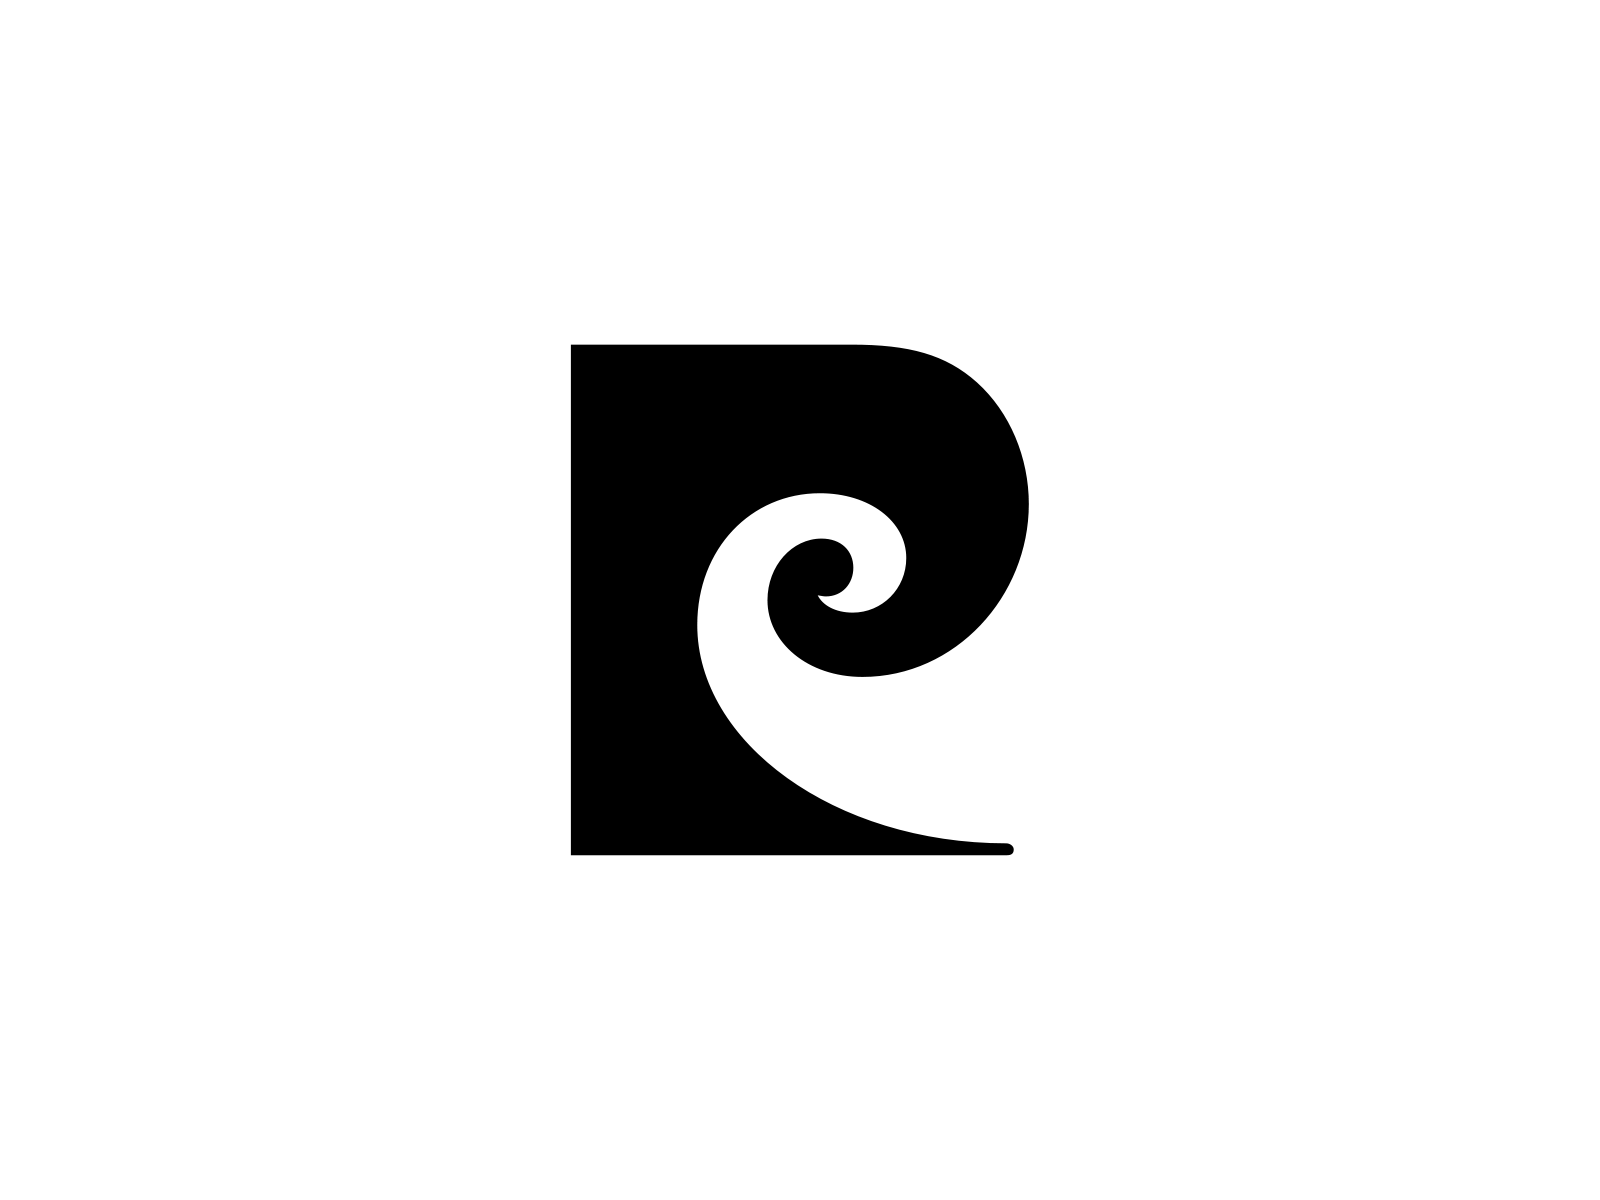 Pierre Cardin Logo Png Images